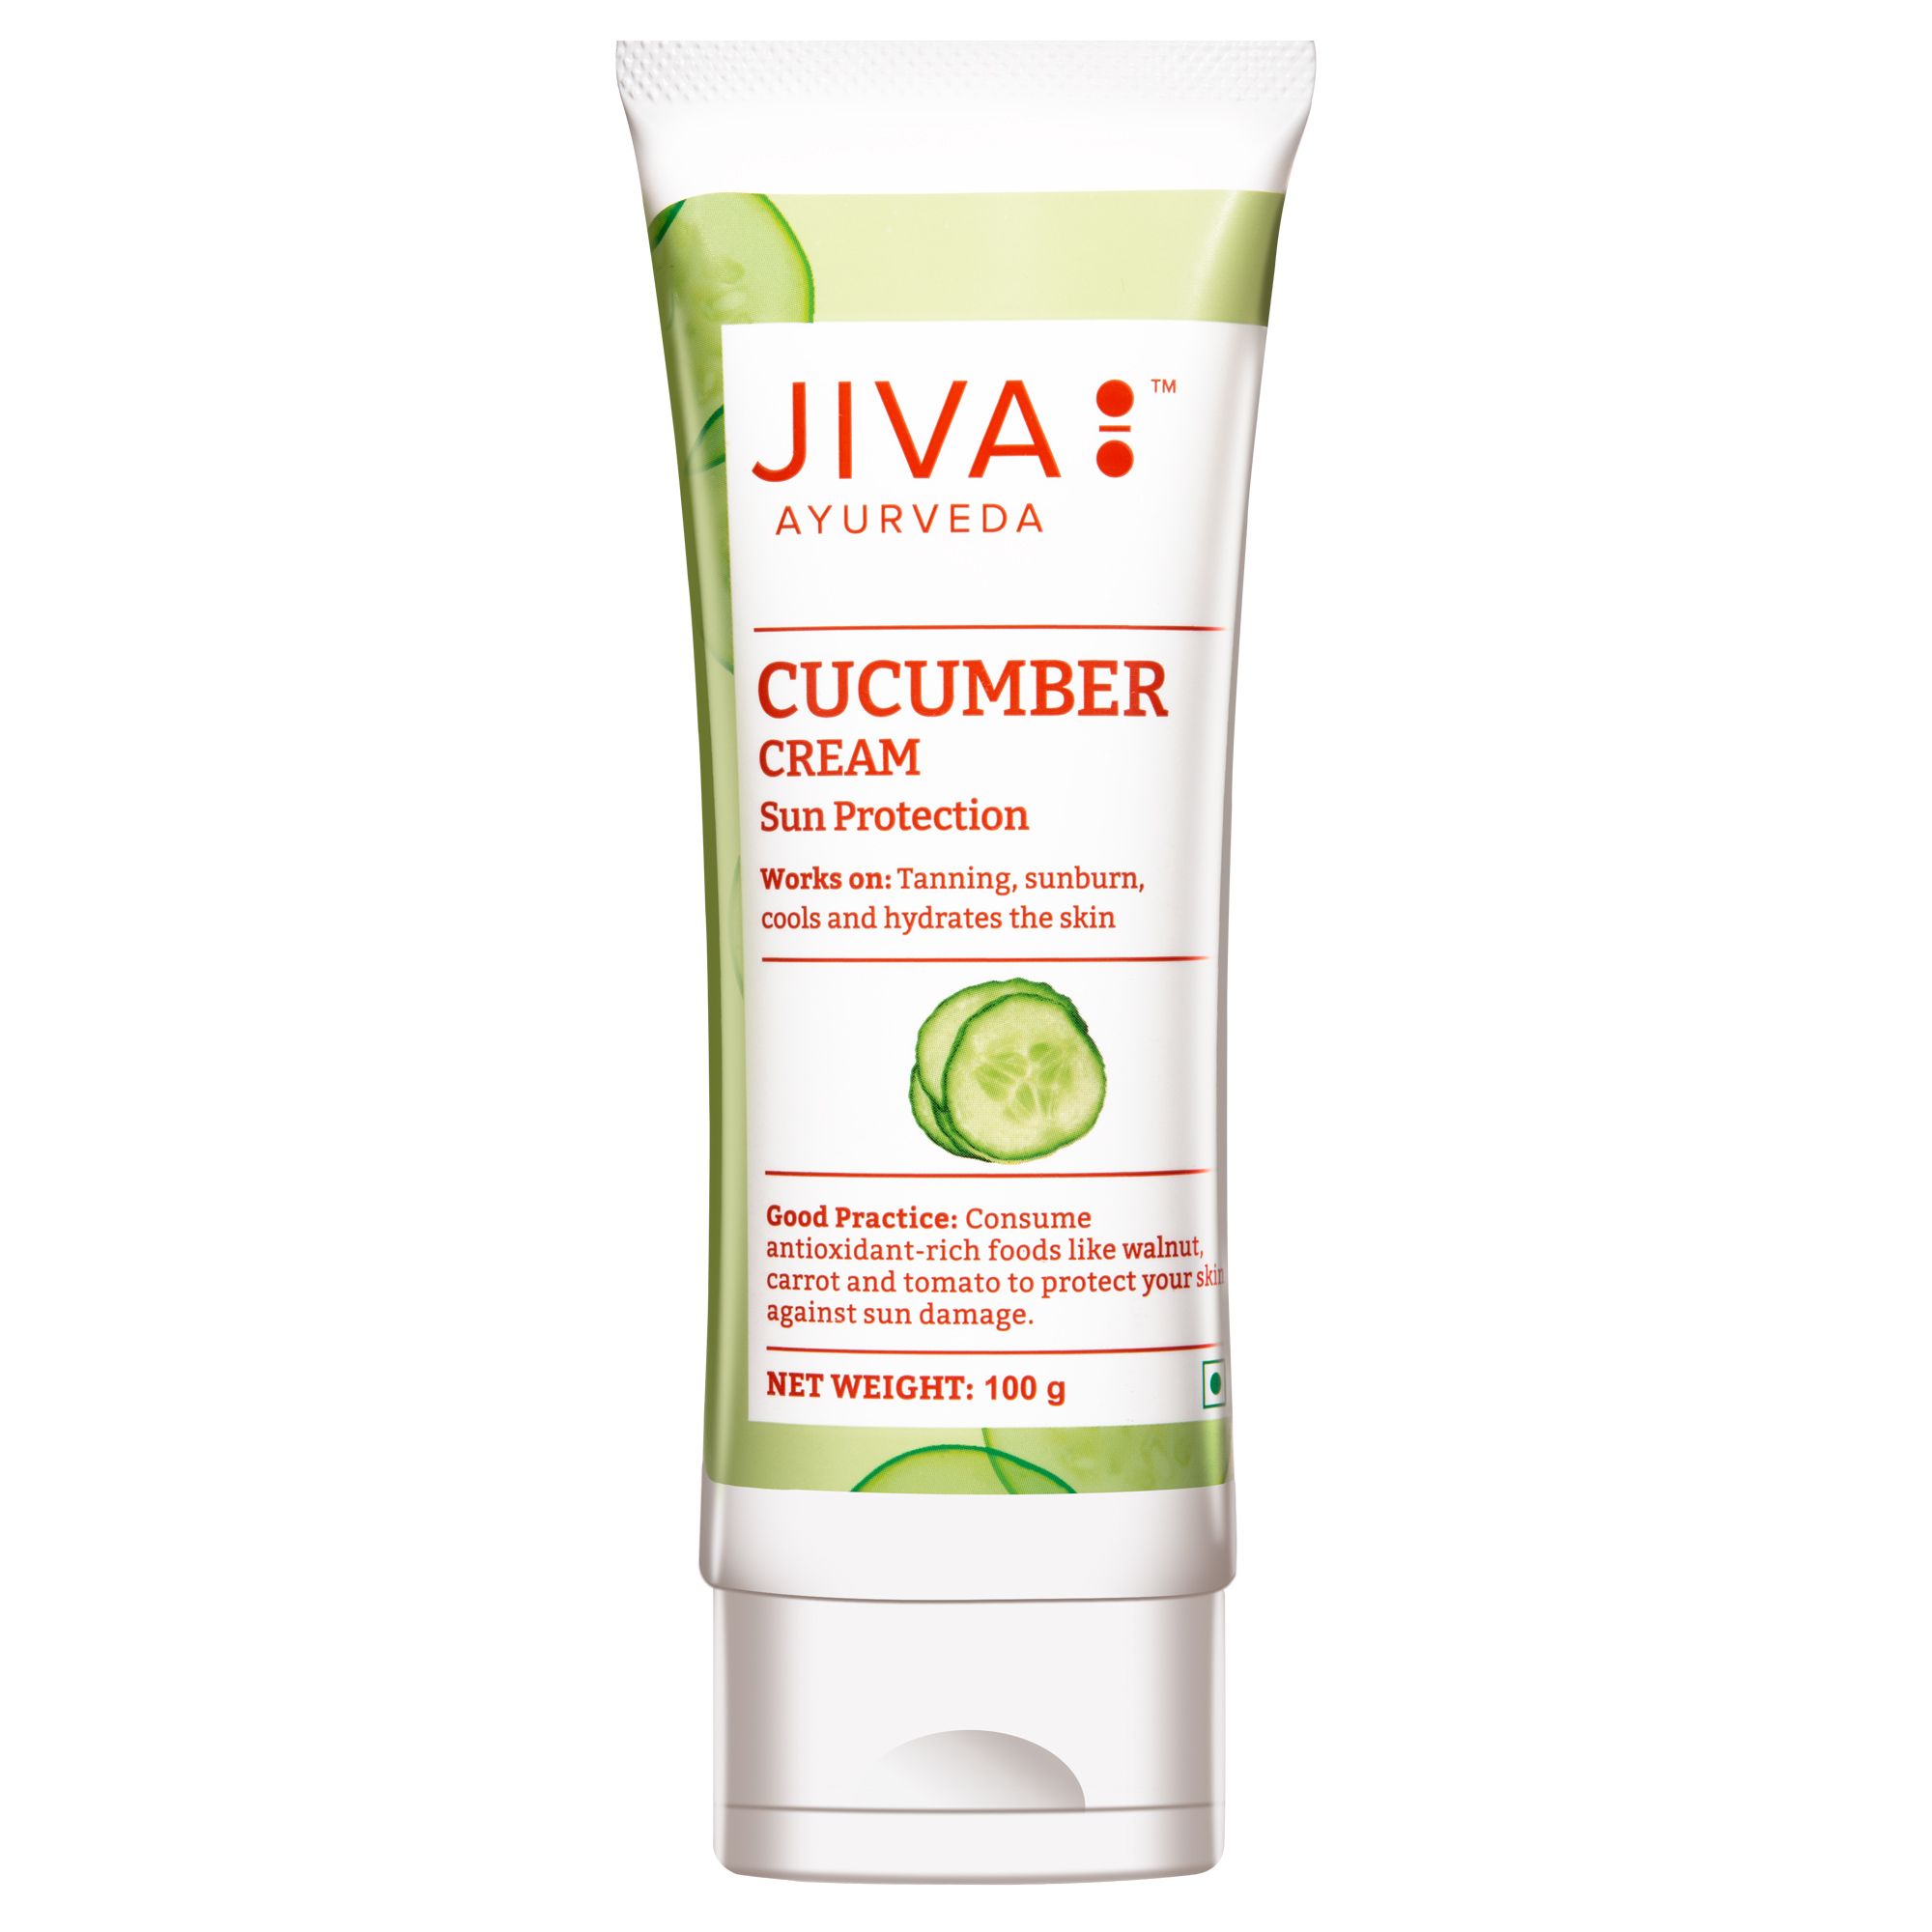 Buy Jiva Ayurveda Cucumber Cream at Best Price Online